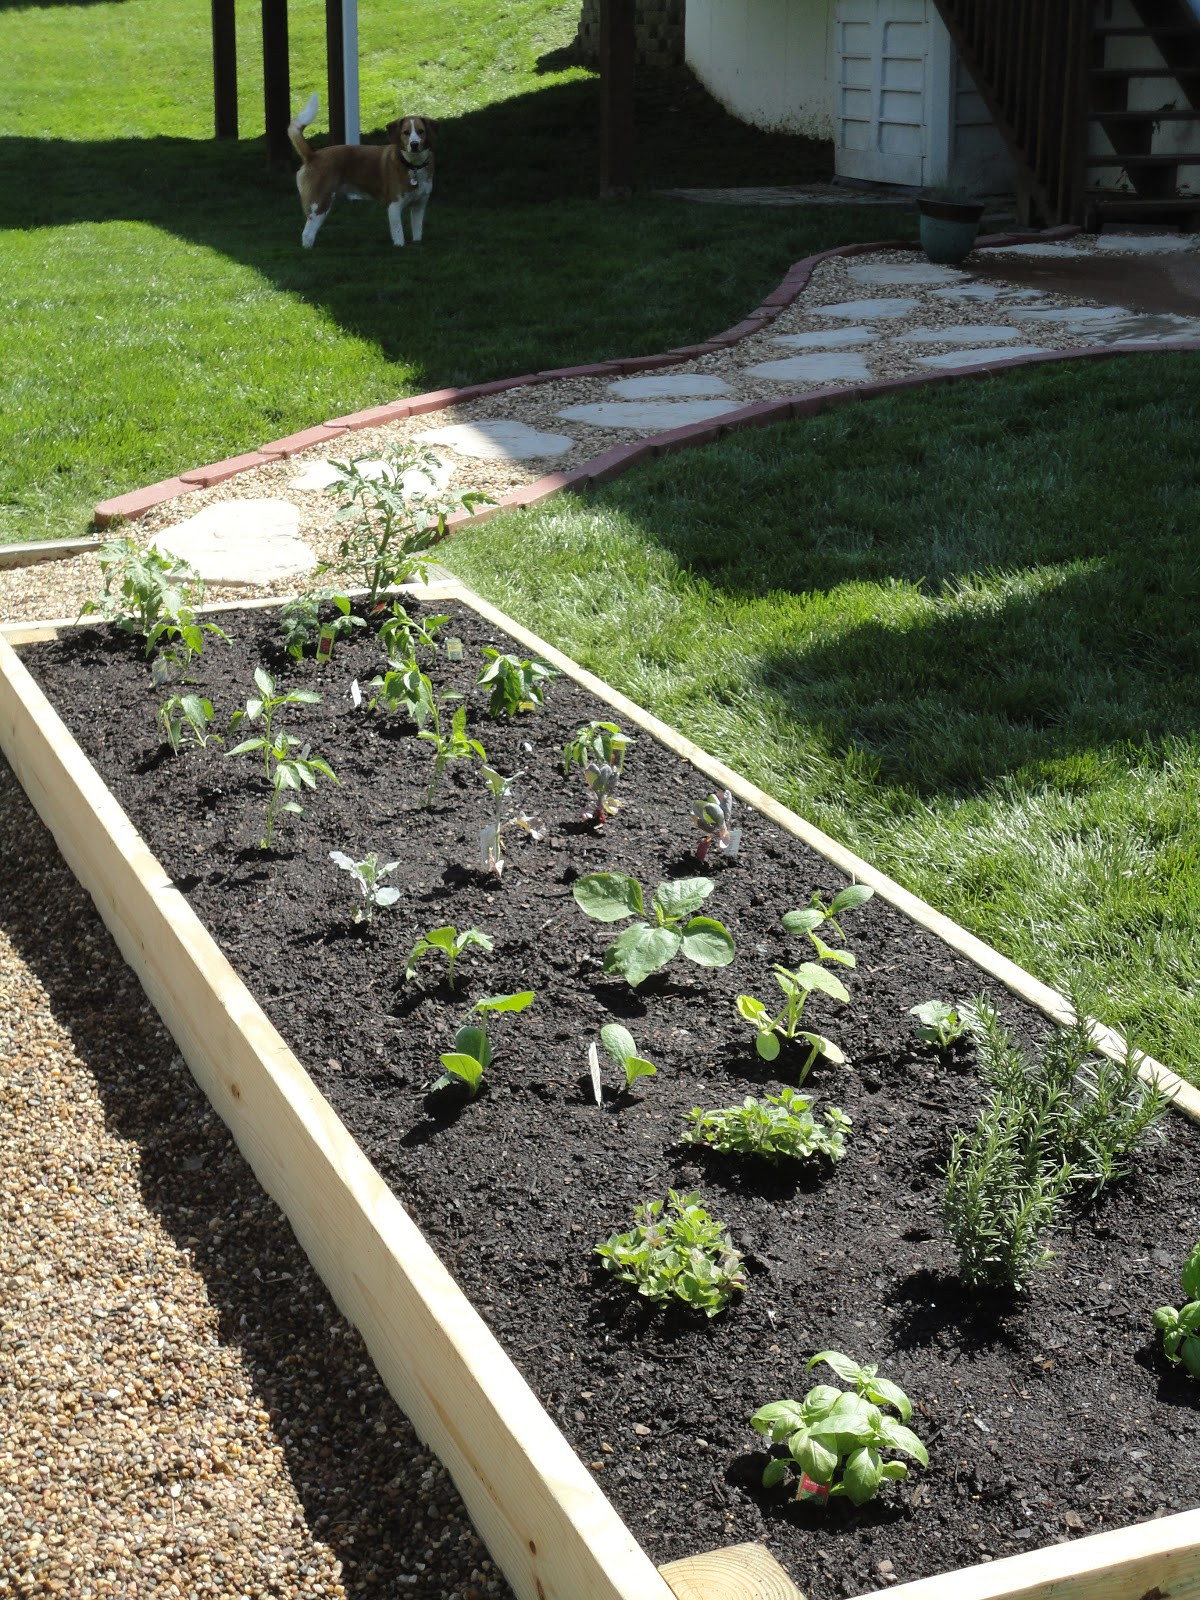 Best ideas about DIY Elevated Garden Bed
. Save or Pin Vanilla Bean DIY Raised Garden Bed Now.